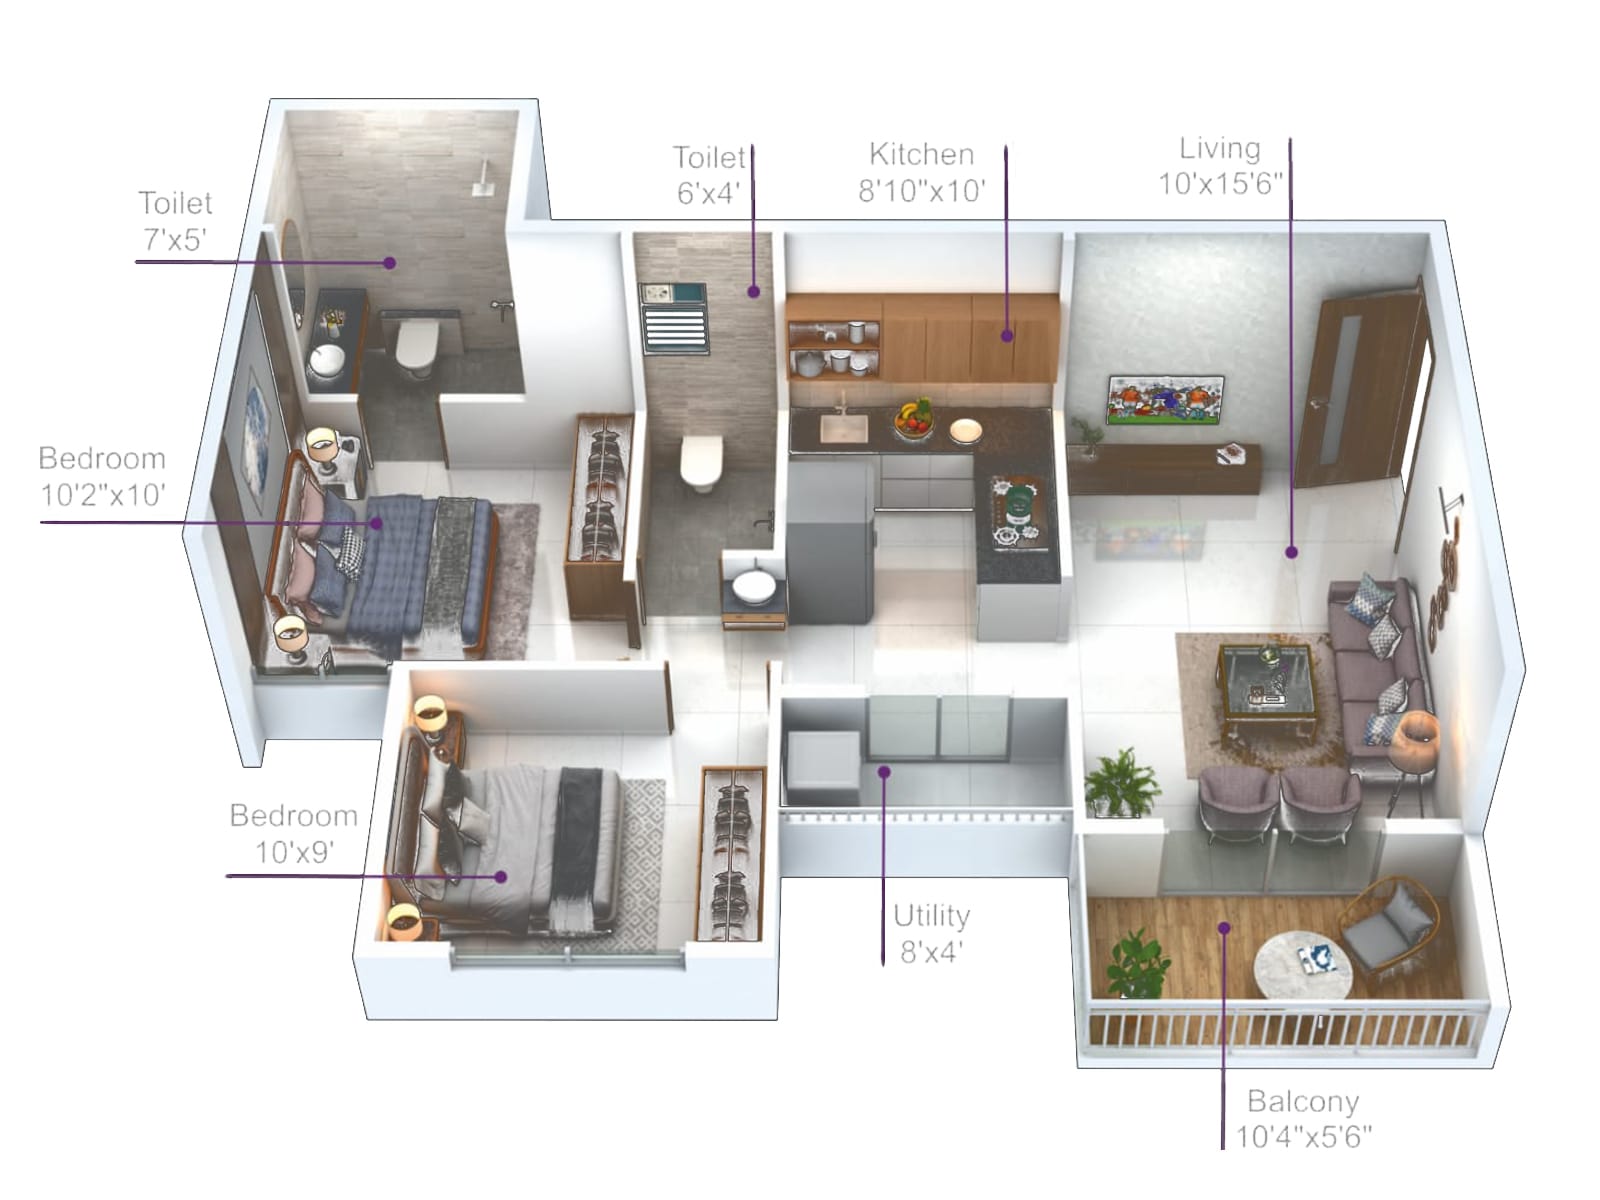 Amrutdhara Housing Complex floor plan layout